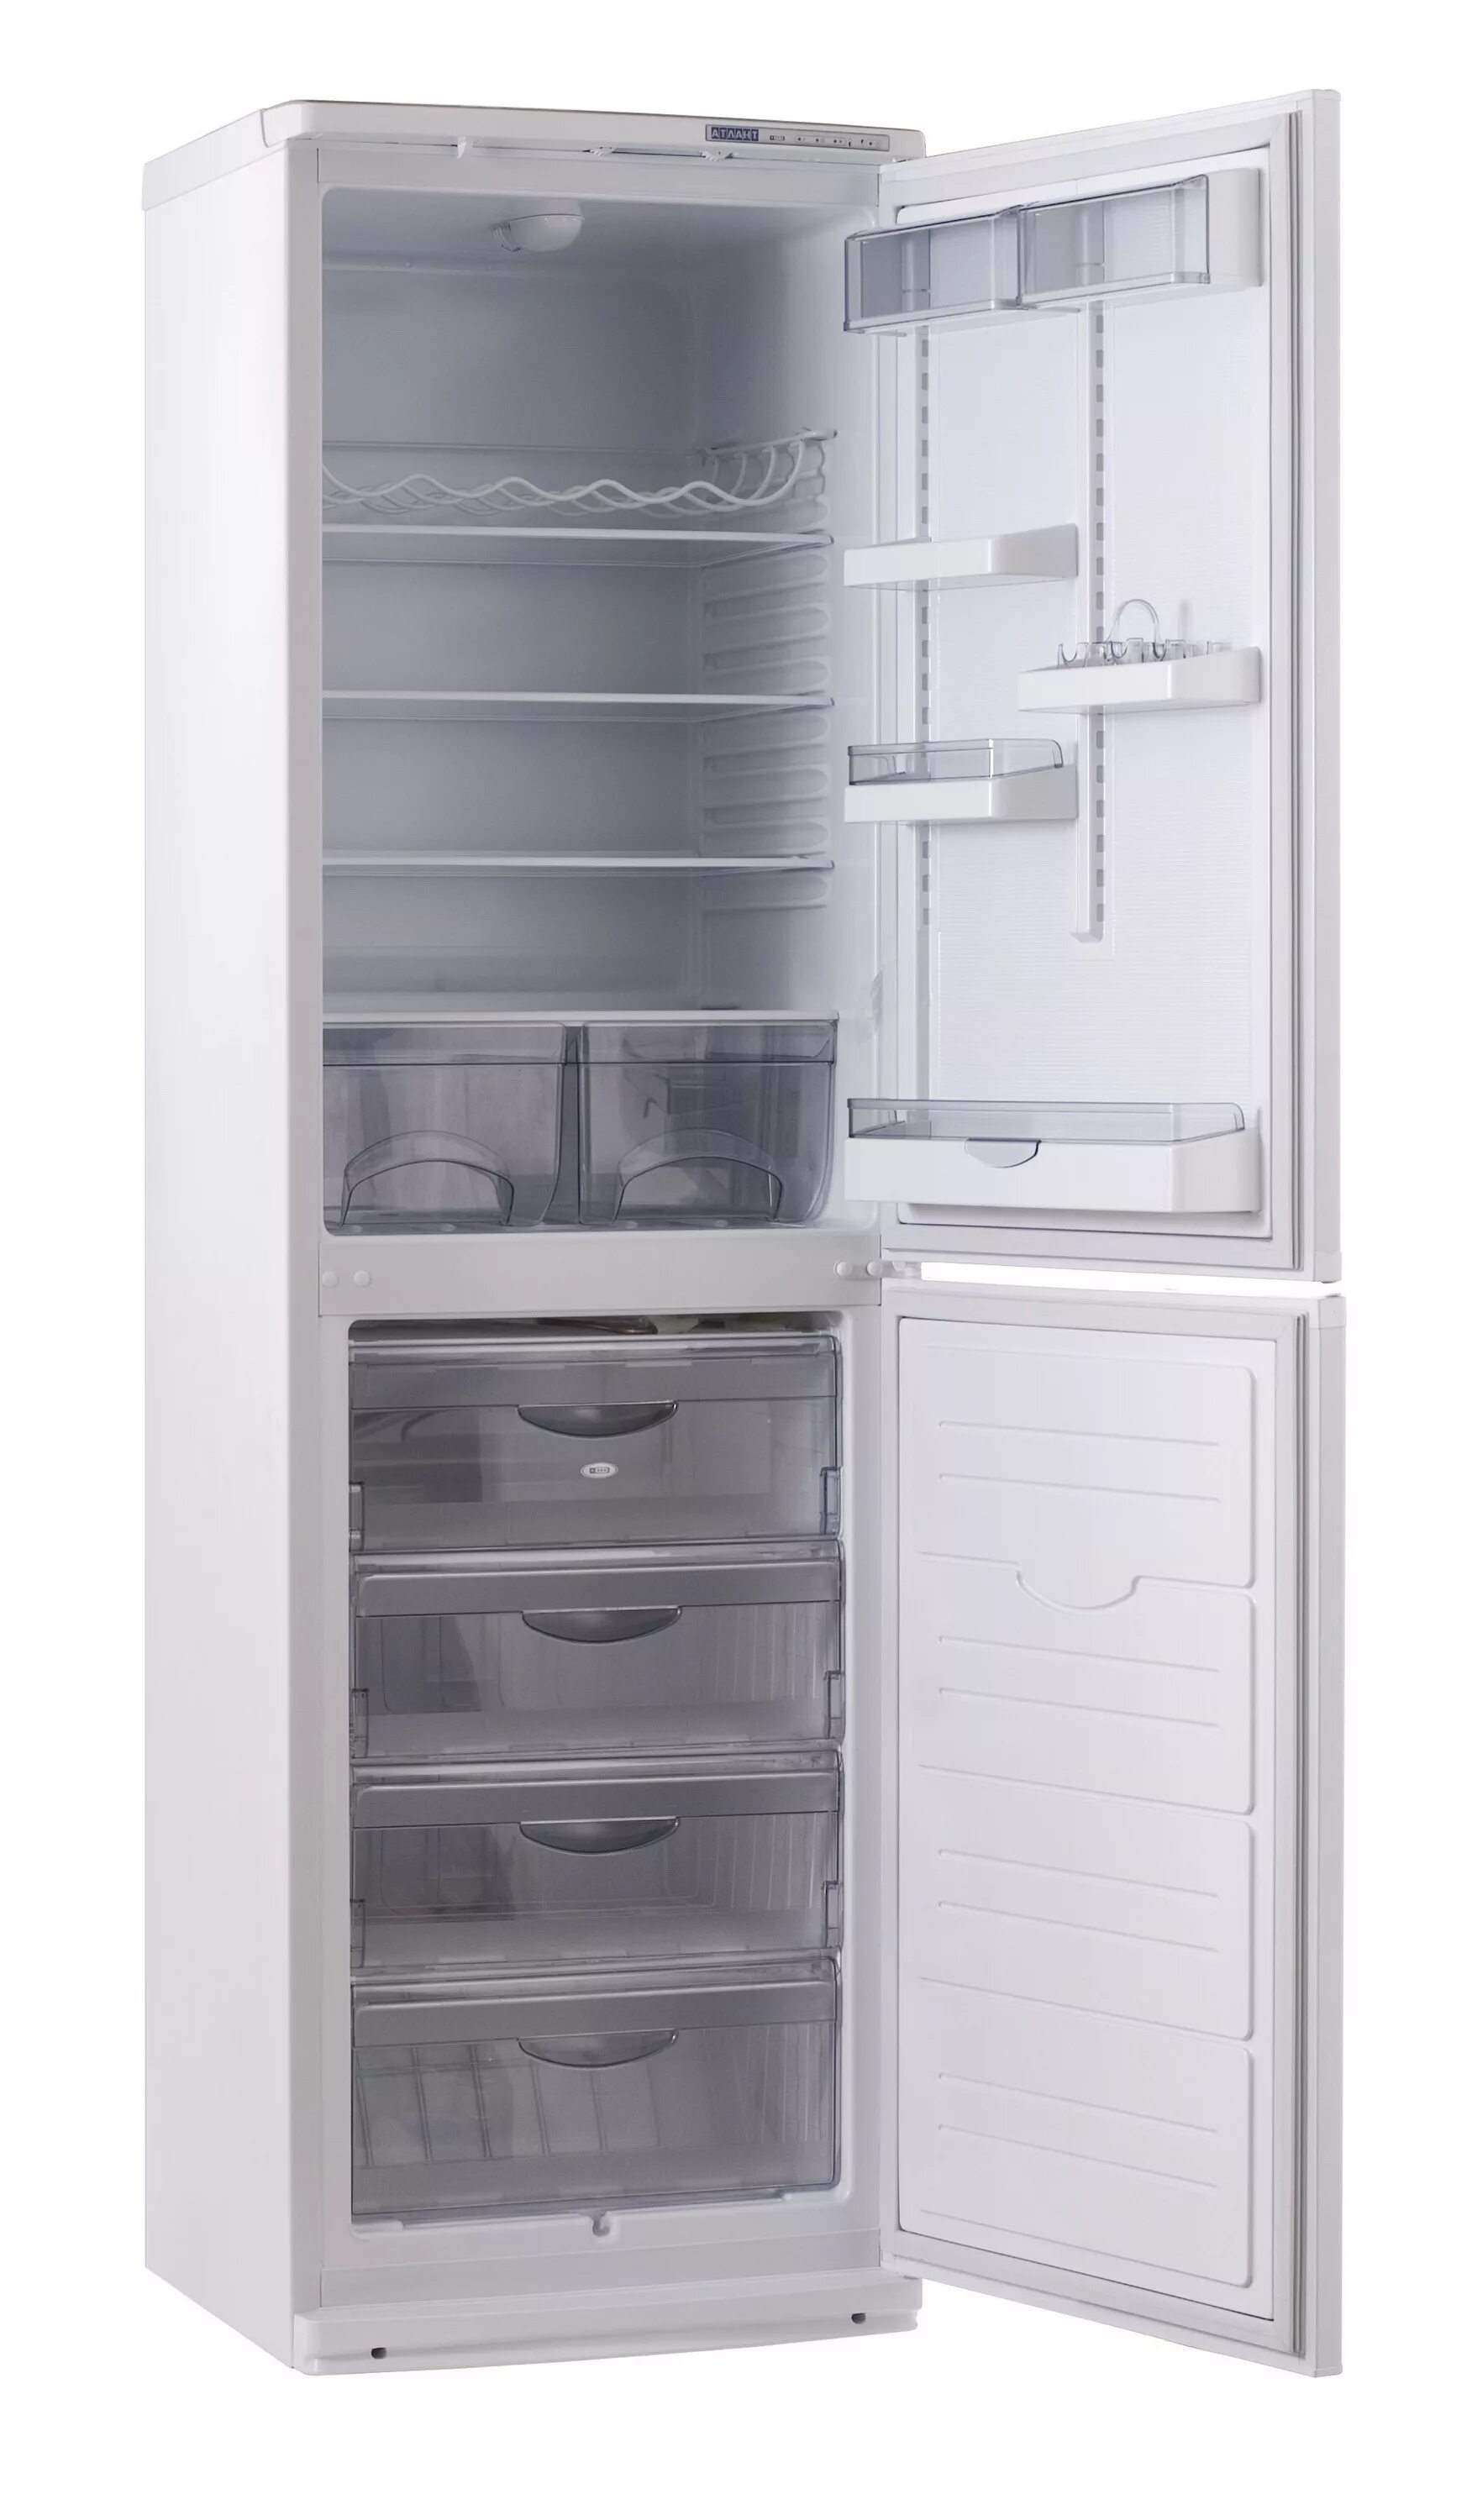 Холодильник Атлант хм 6025-031. Холодильник-морозильник Атлант хм-6025-031. Холодильник Атлант 6025. Холодильник Атлант двухкомпрессорный хм-6025-031. Купит холодильник атлант 6025